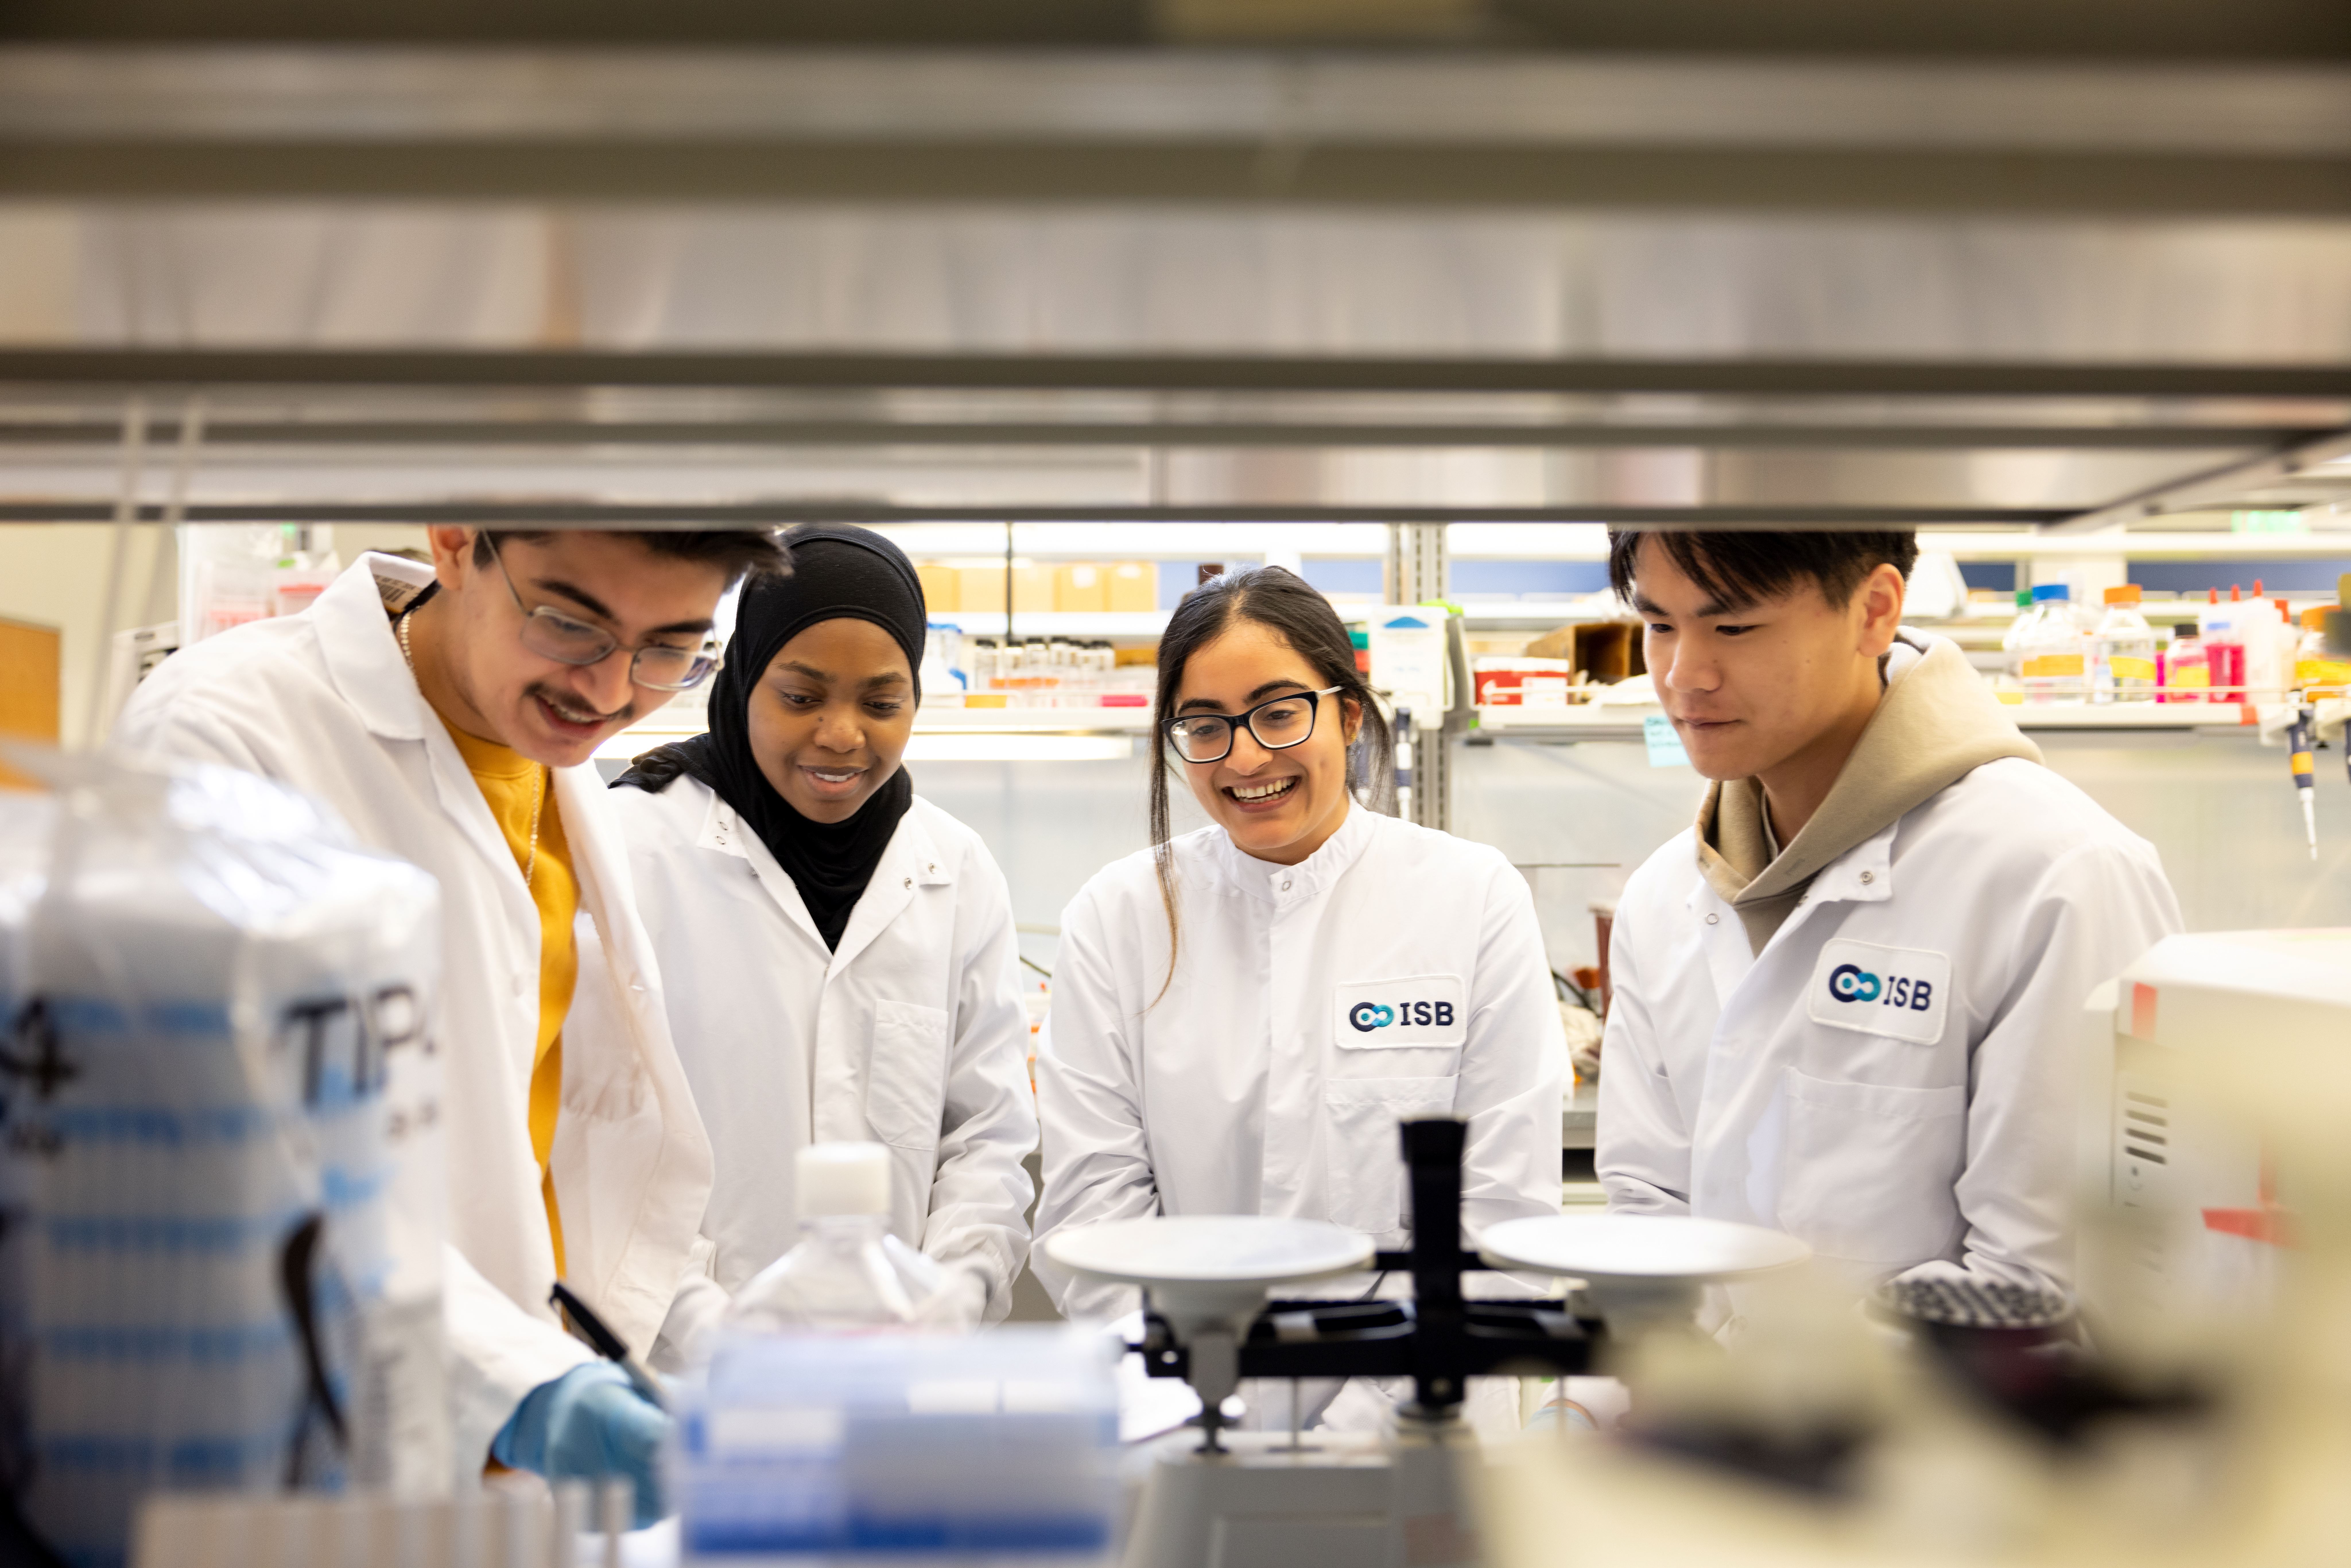 Luis, Rehema, Alisha, & Brian in a science lab wearing white lab coats